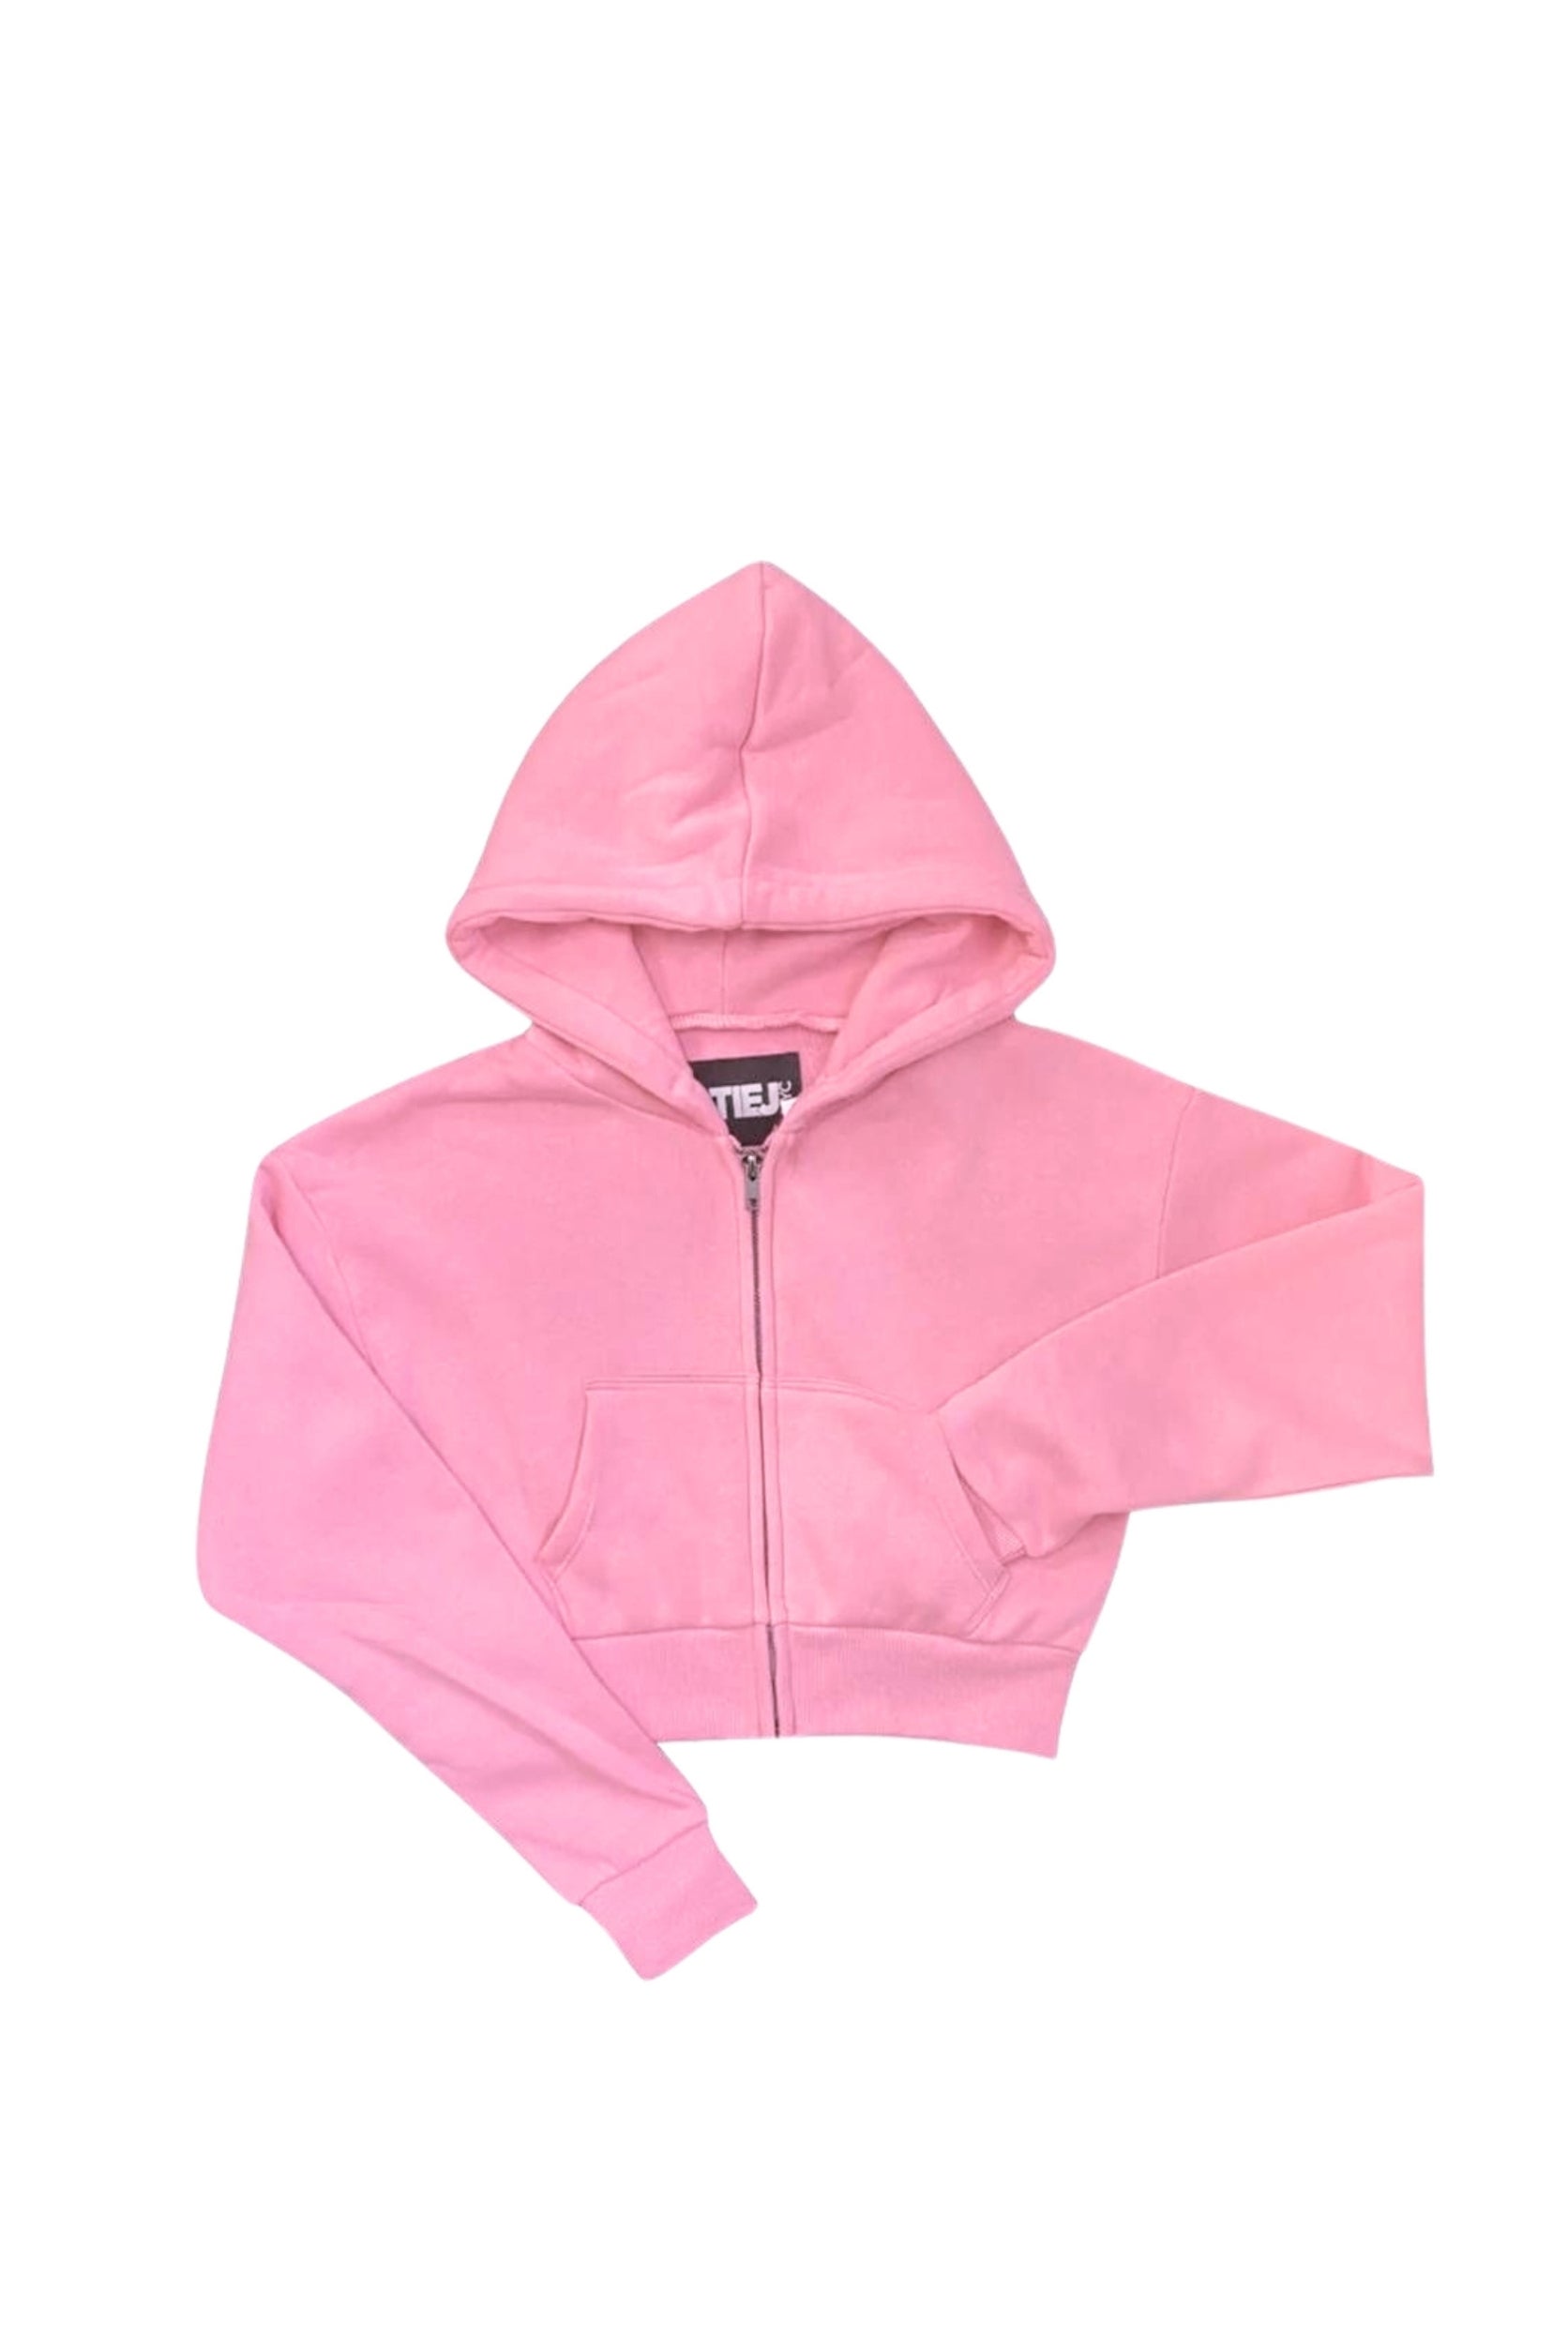 Jo+Jax Dreamer Sweatshirt - Girls - Pink Sand - Dancewear Centre